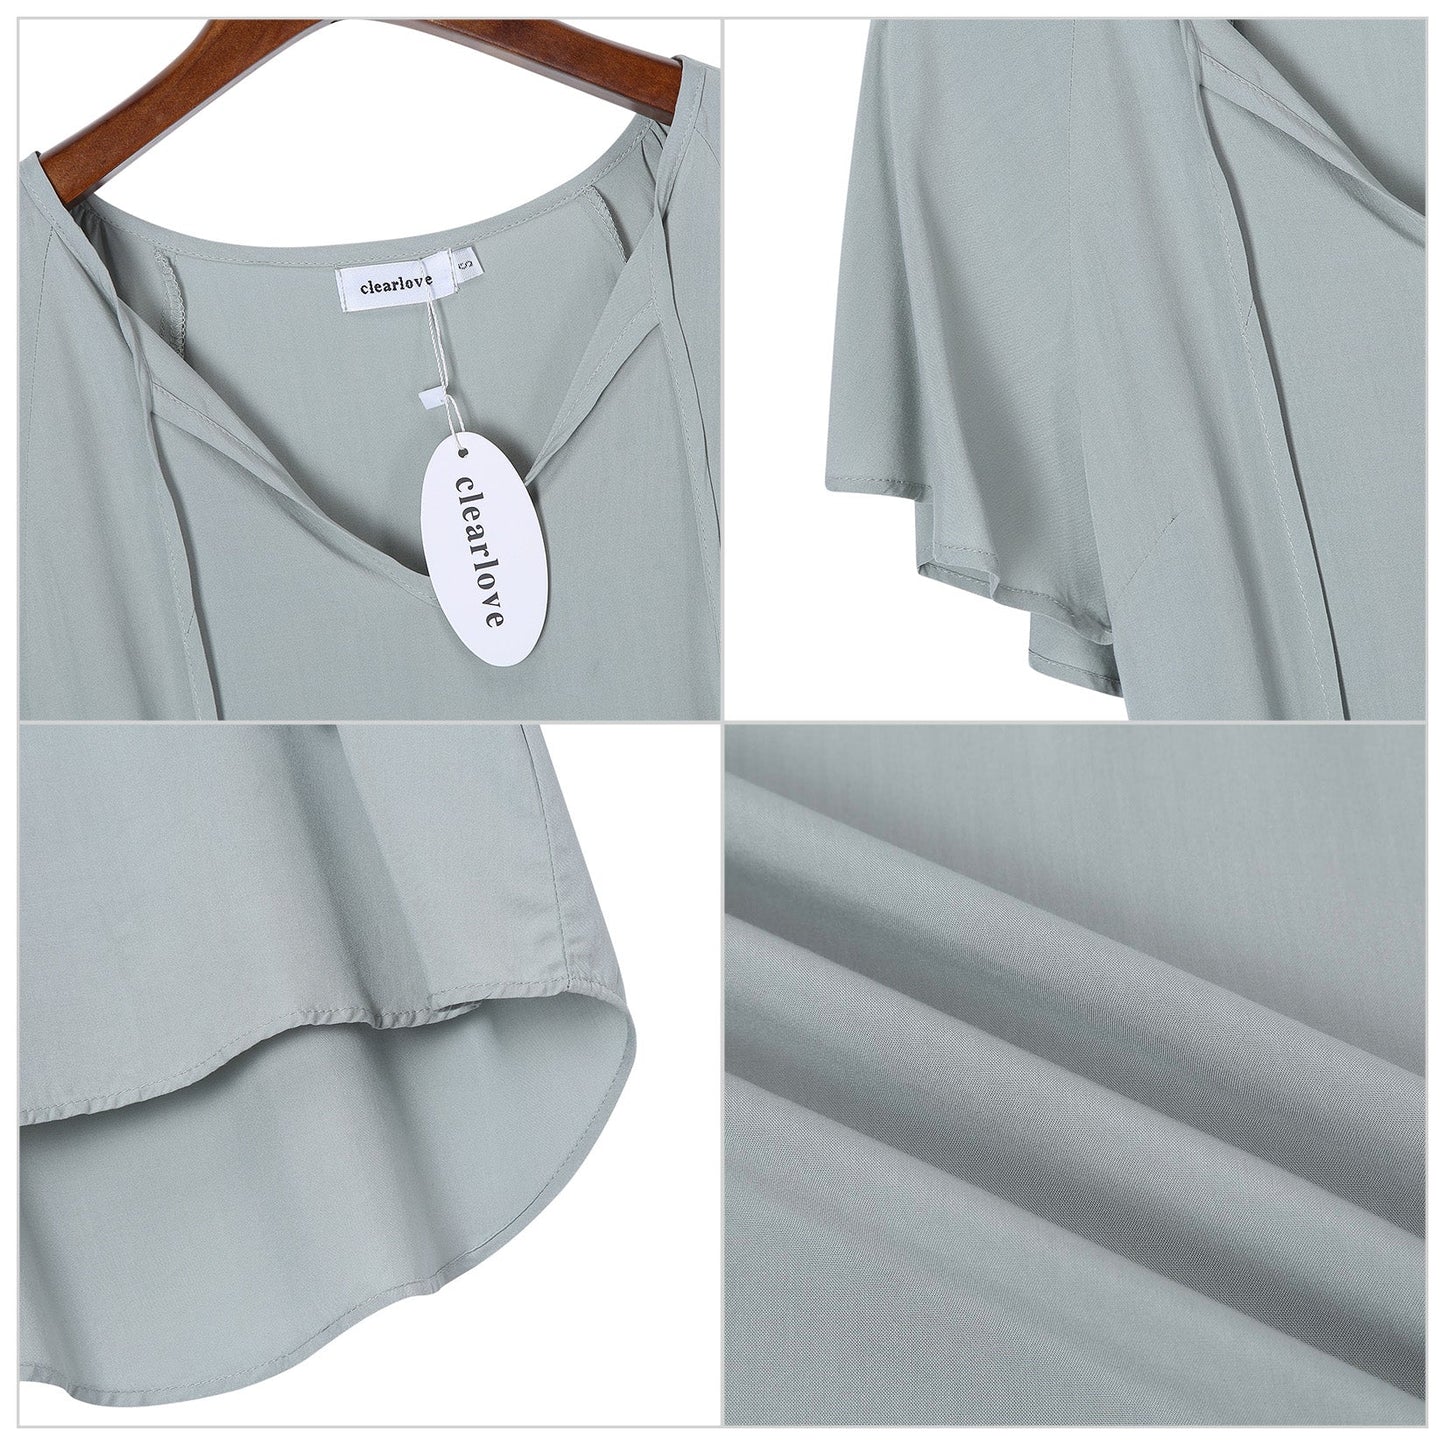 CLEARLOVE Women's V Neck Top Short Ruffle Drawstring Shirt Grey